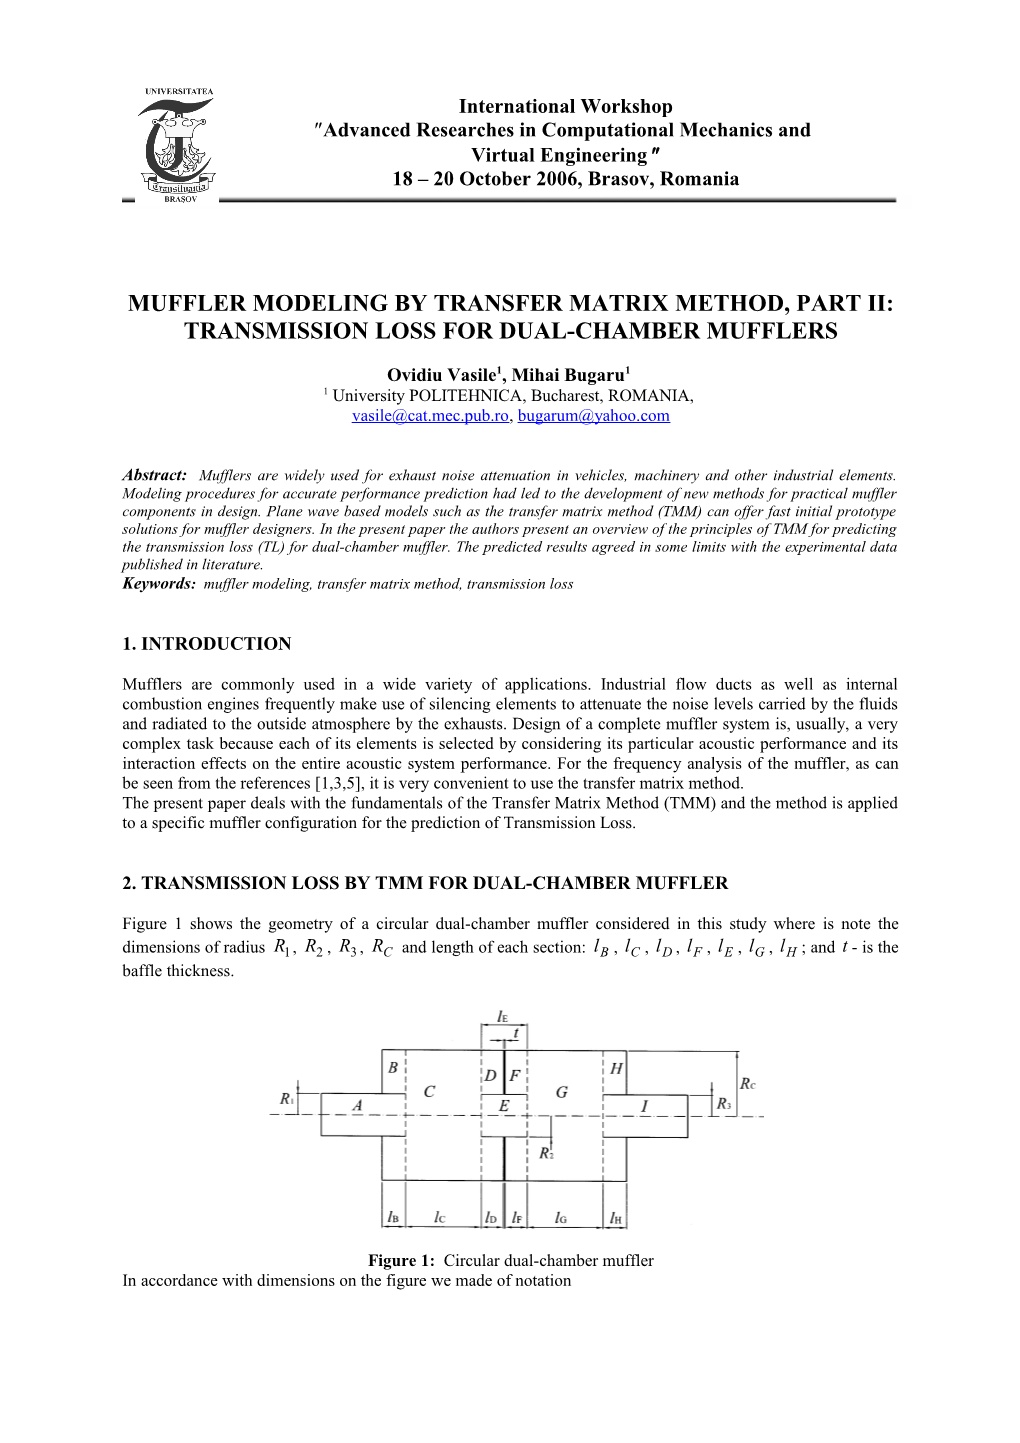 Muffler Modeling by Transfer Matrix Method, Part Ii: Transmission Loss for Dual-Chamber Mufflers